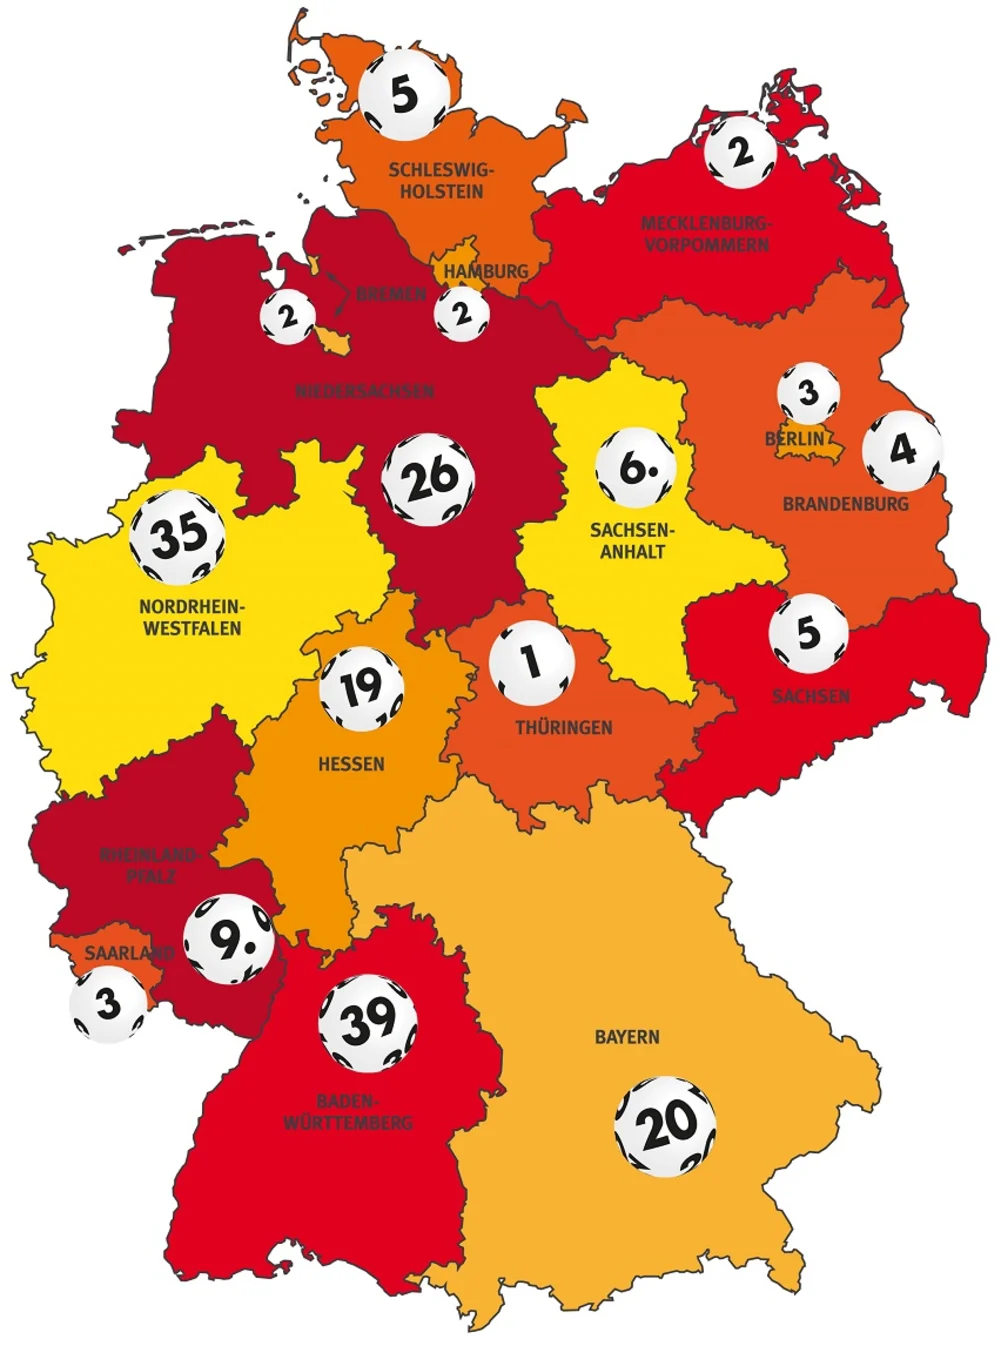 DLTB Jahresbilanz 2021: Landkarte der Millionäre je Bundesland